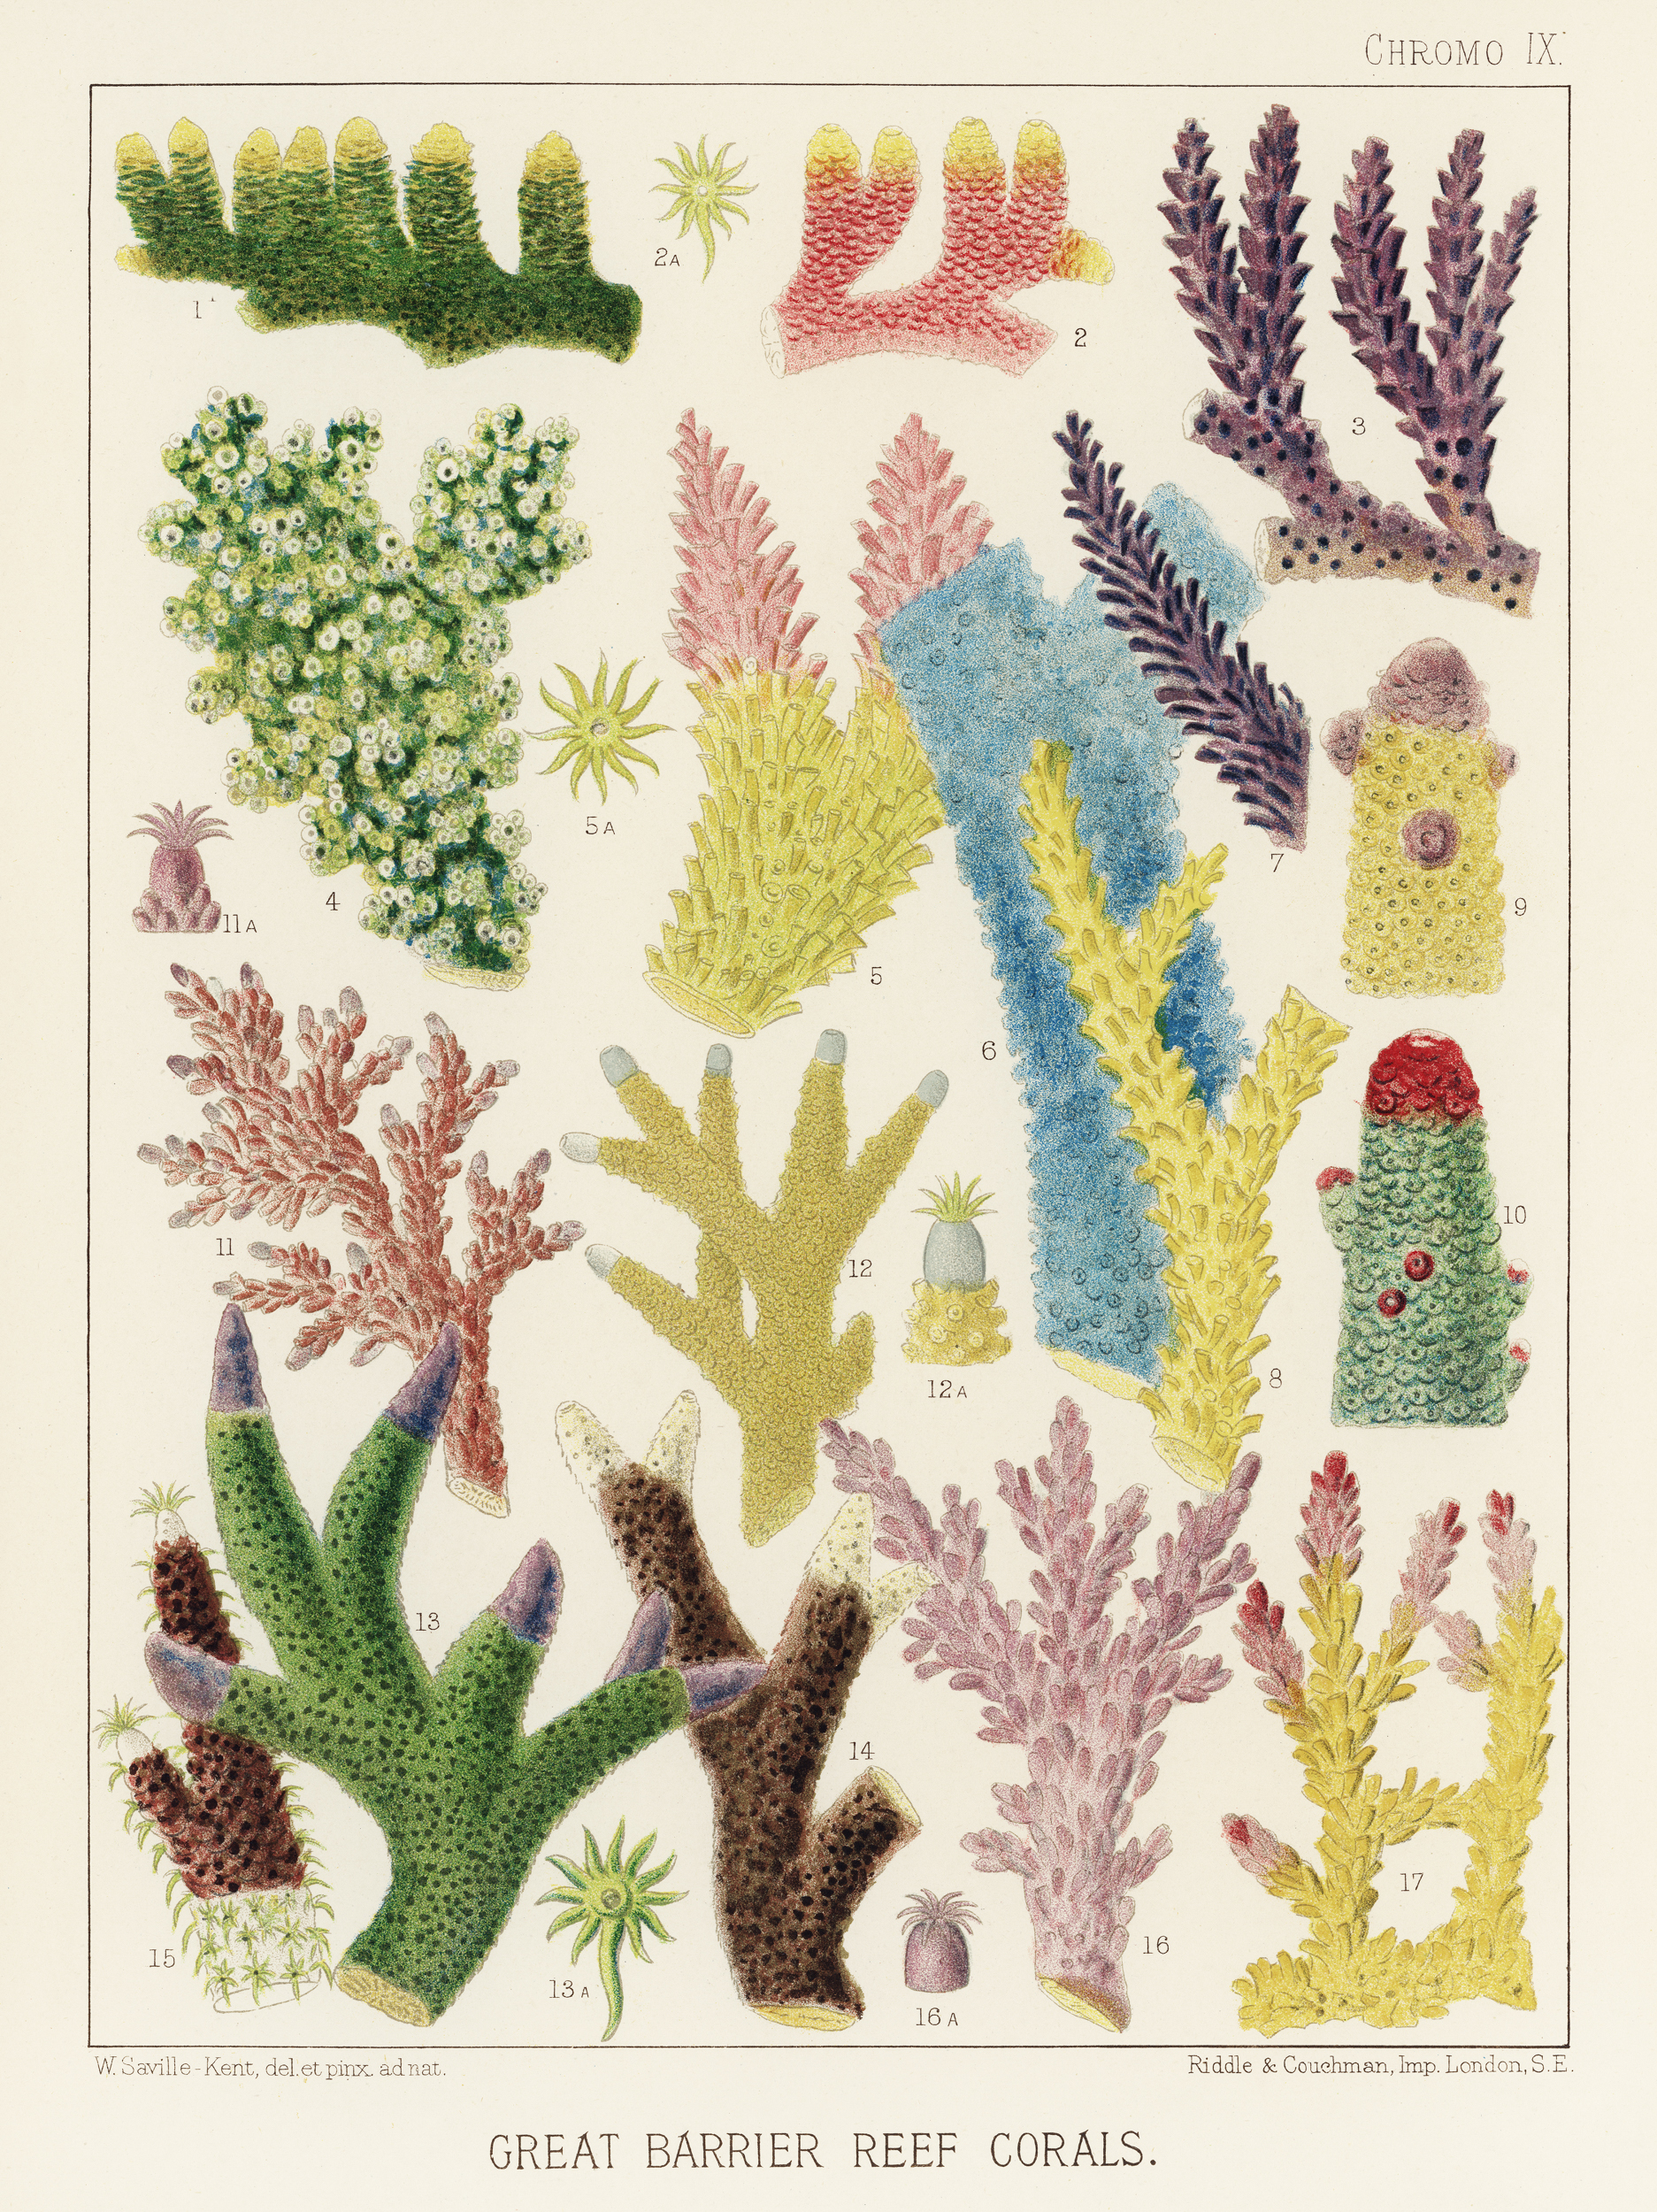 A scientific illustration of various reef corals